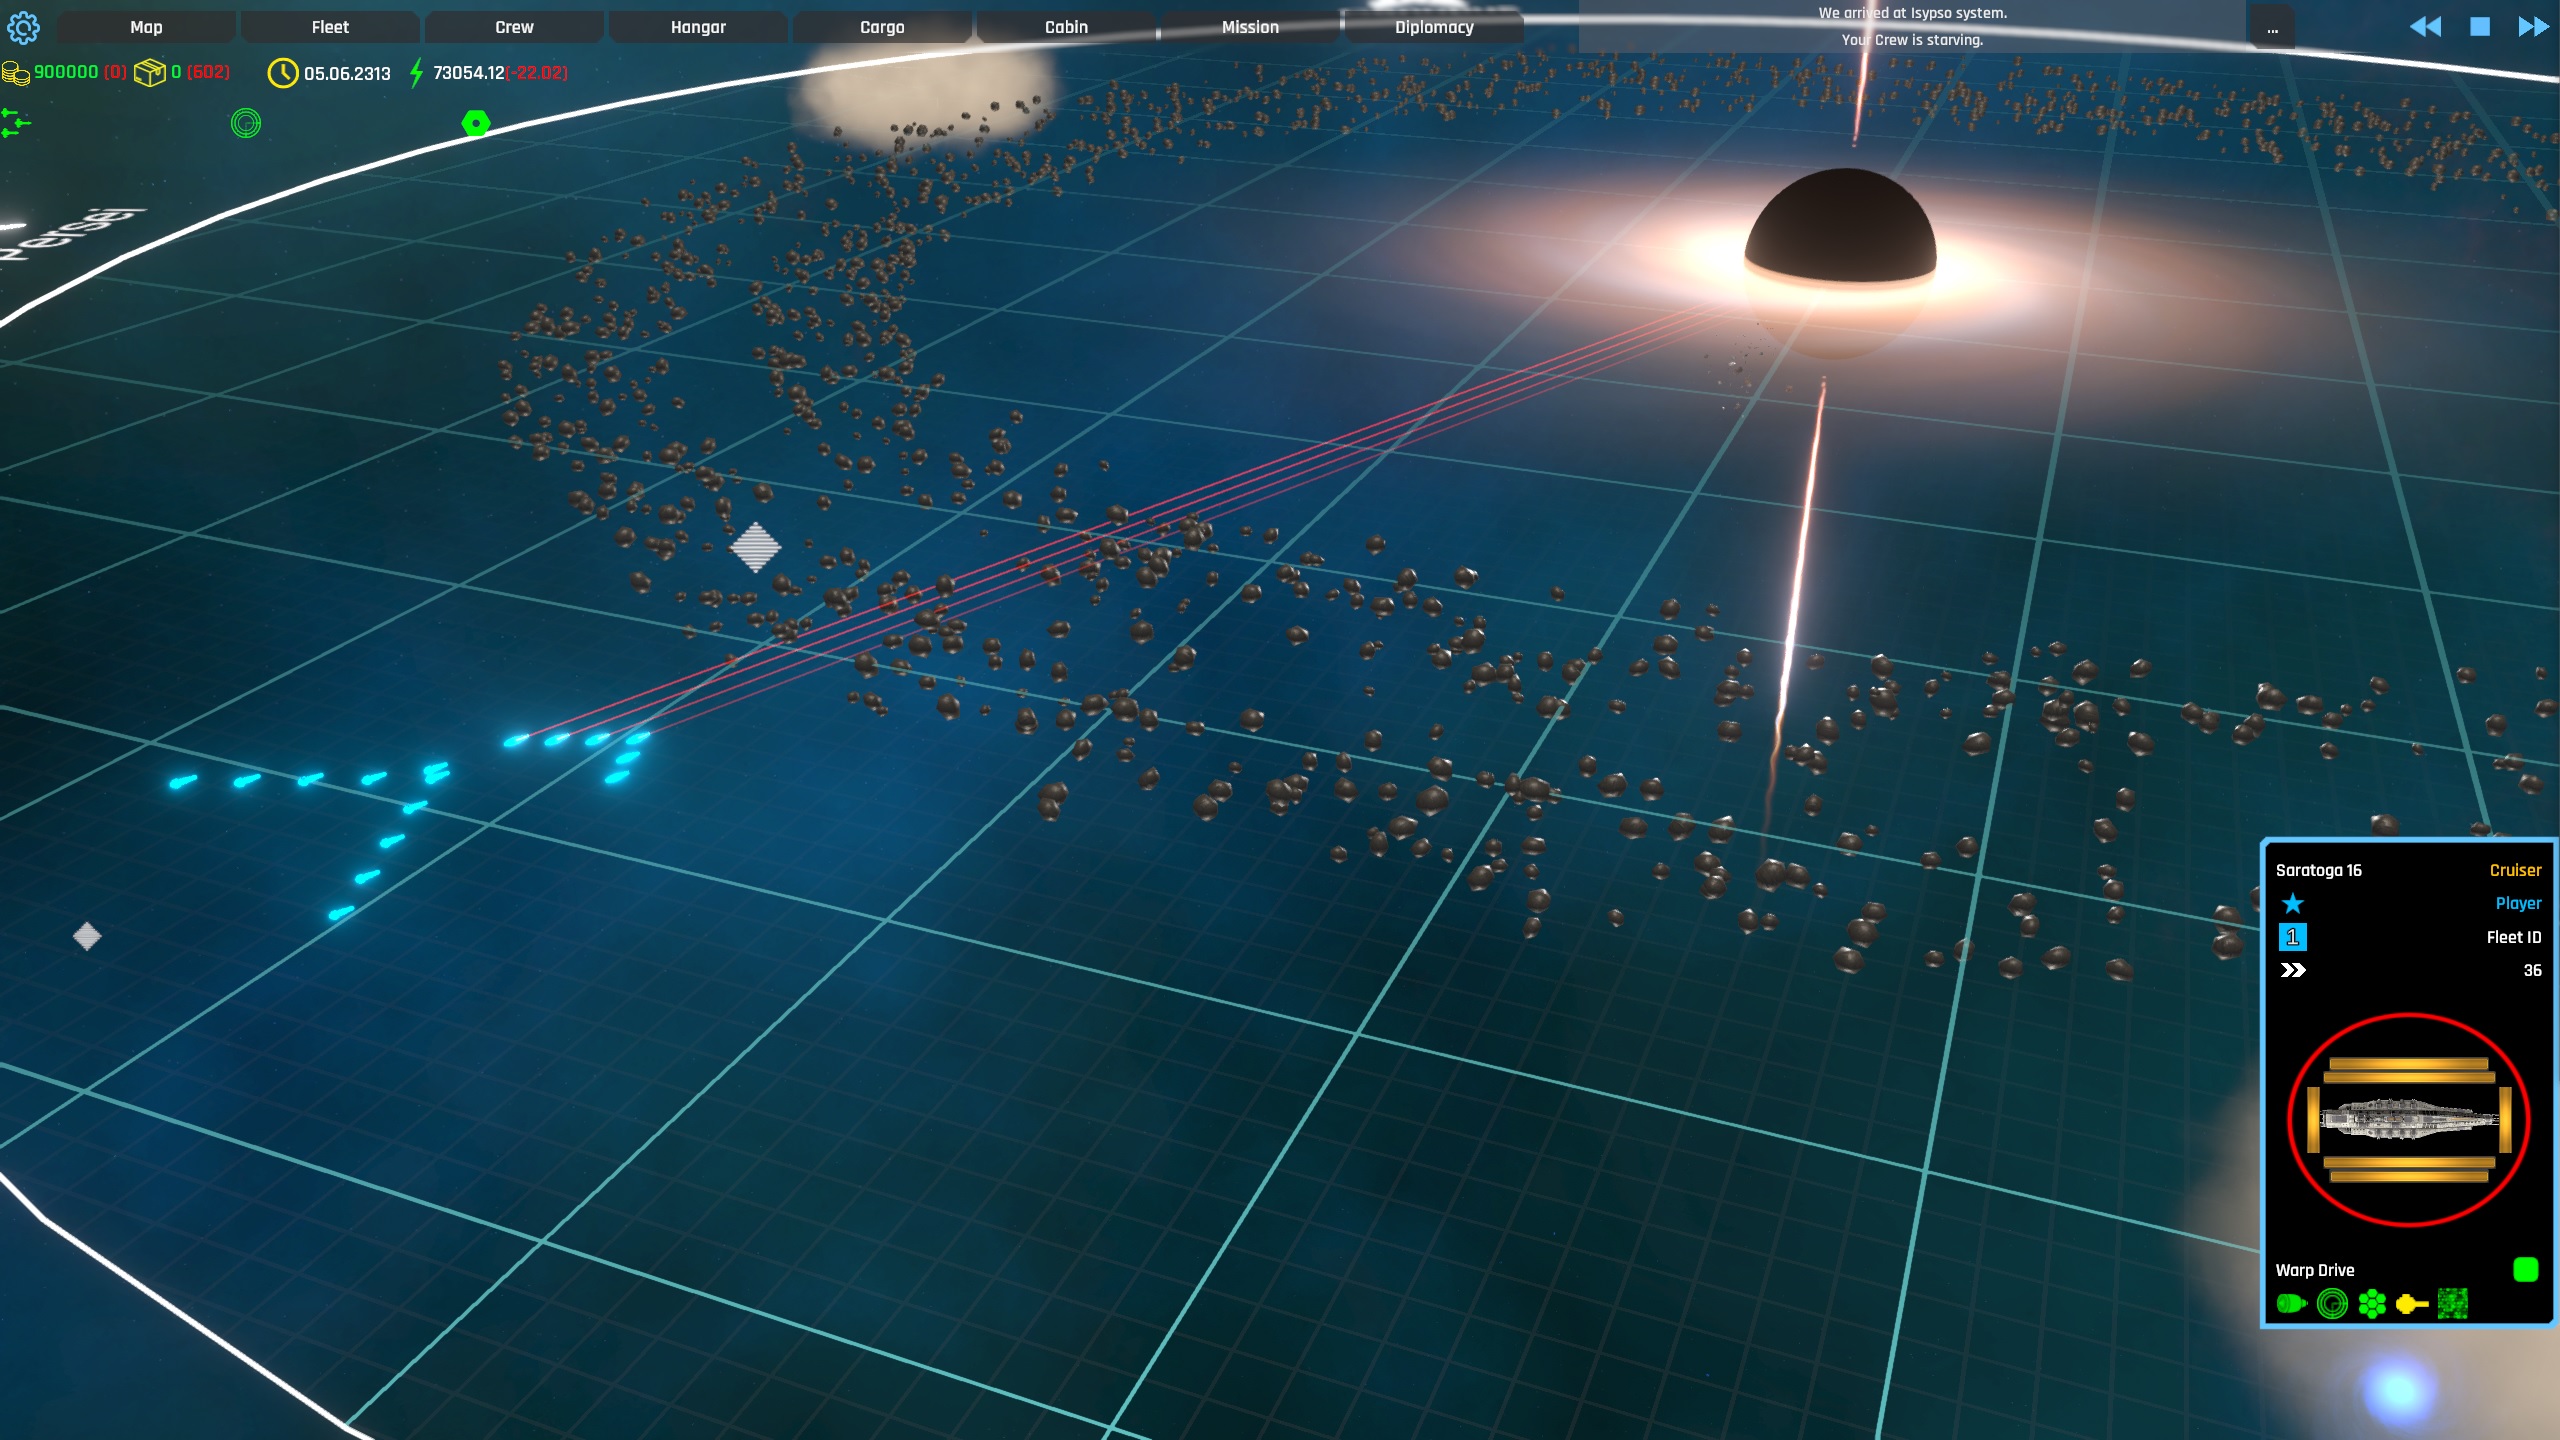 Fleet in formation is approaching a black hole.